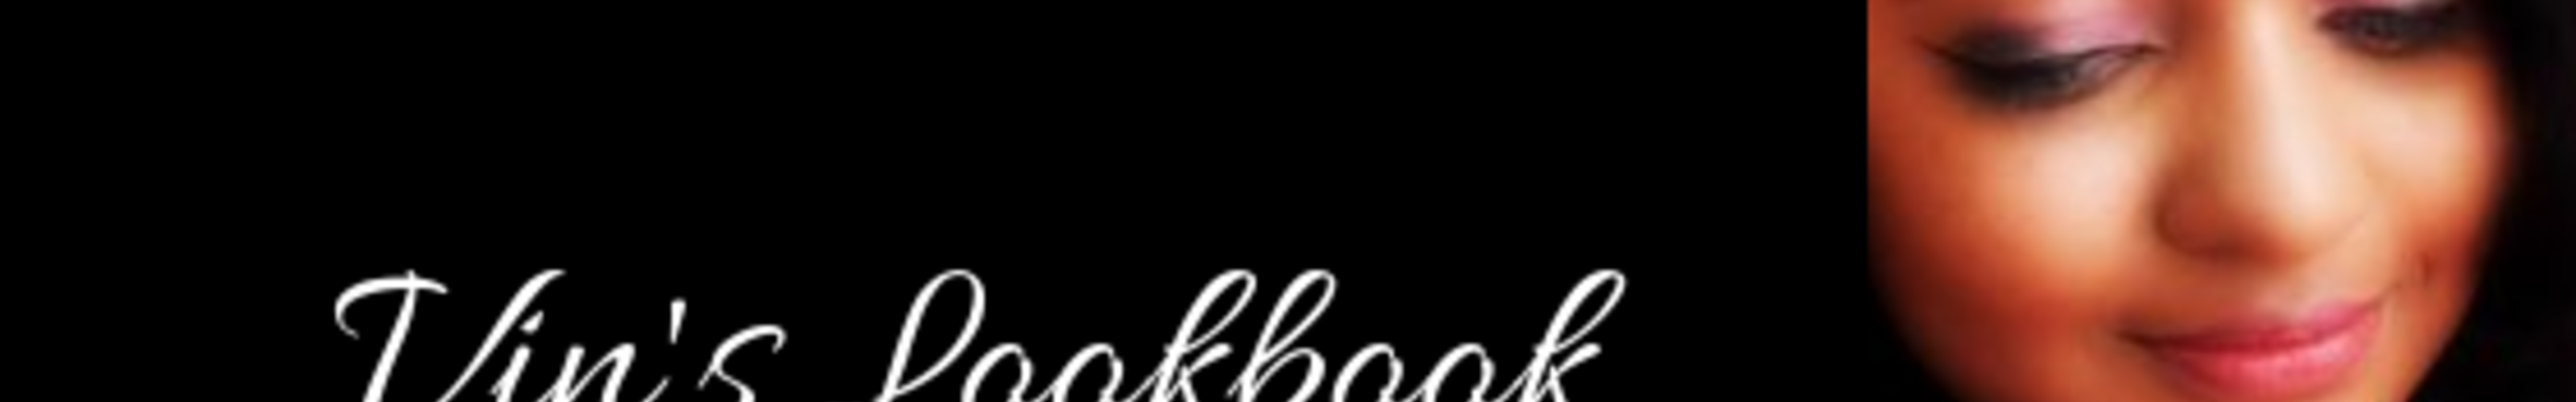 Vin's Lookbook's profile banner